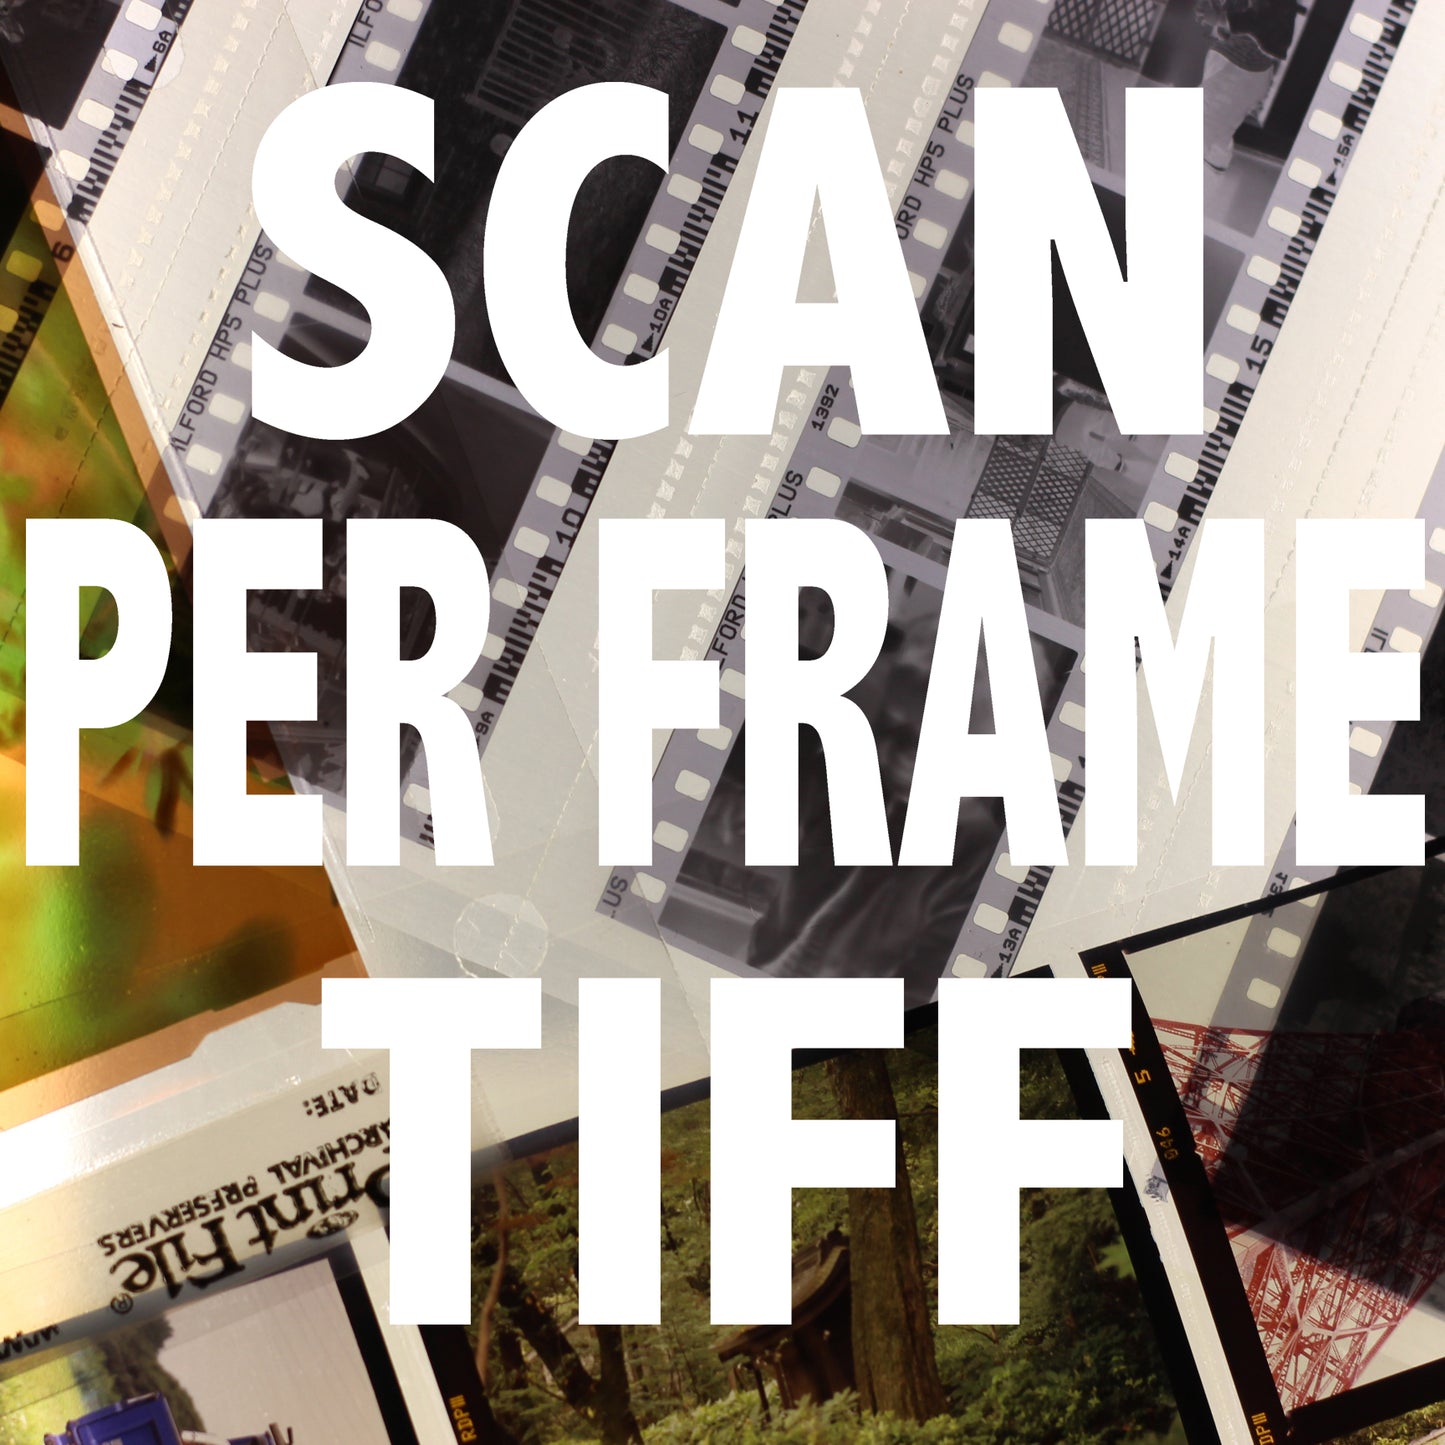 Scanning per frame Tiff